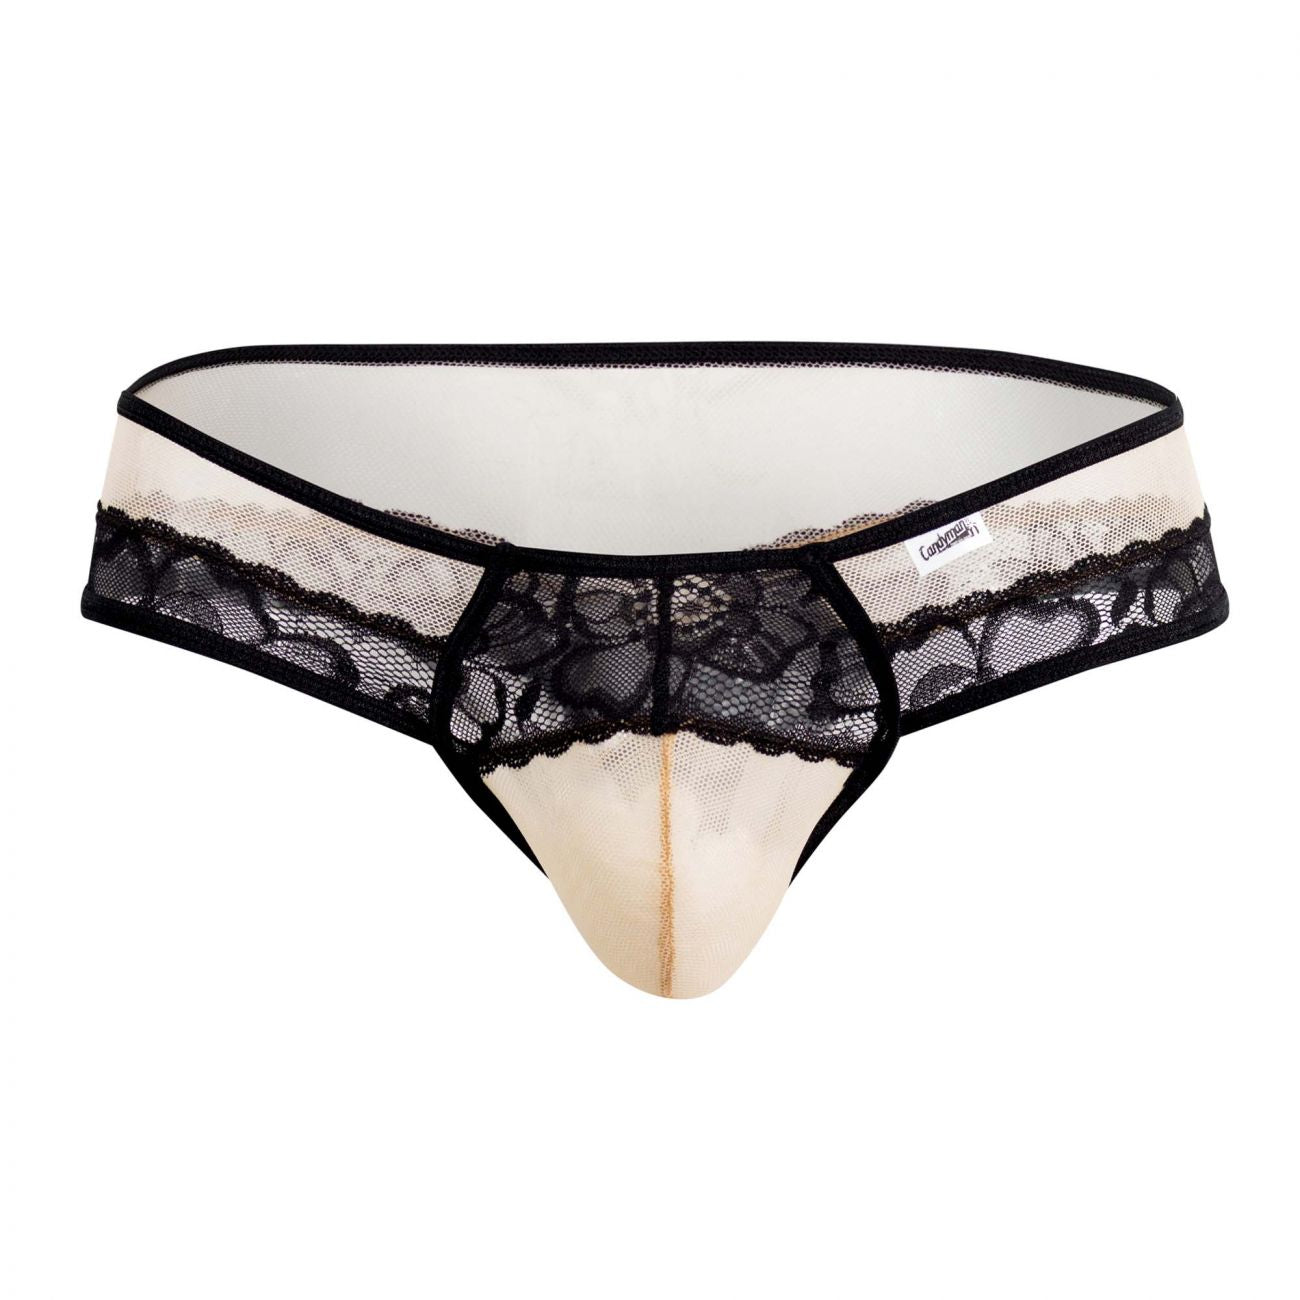 SALE - CandyMan 99516 Mesh-Lace Thongs Beige & Black